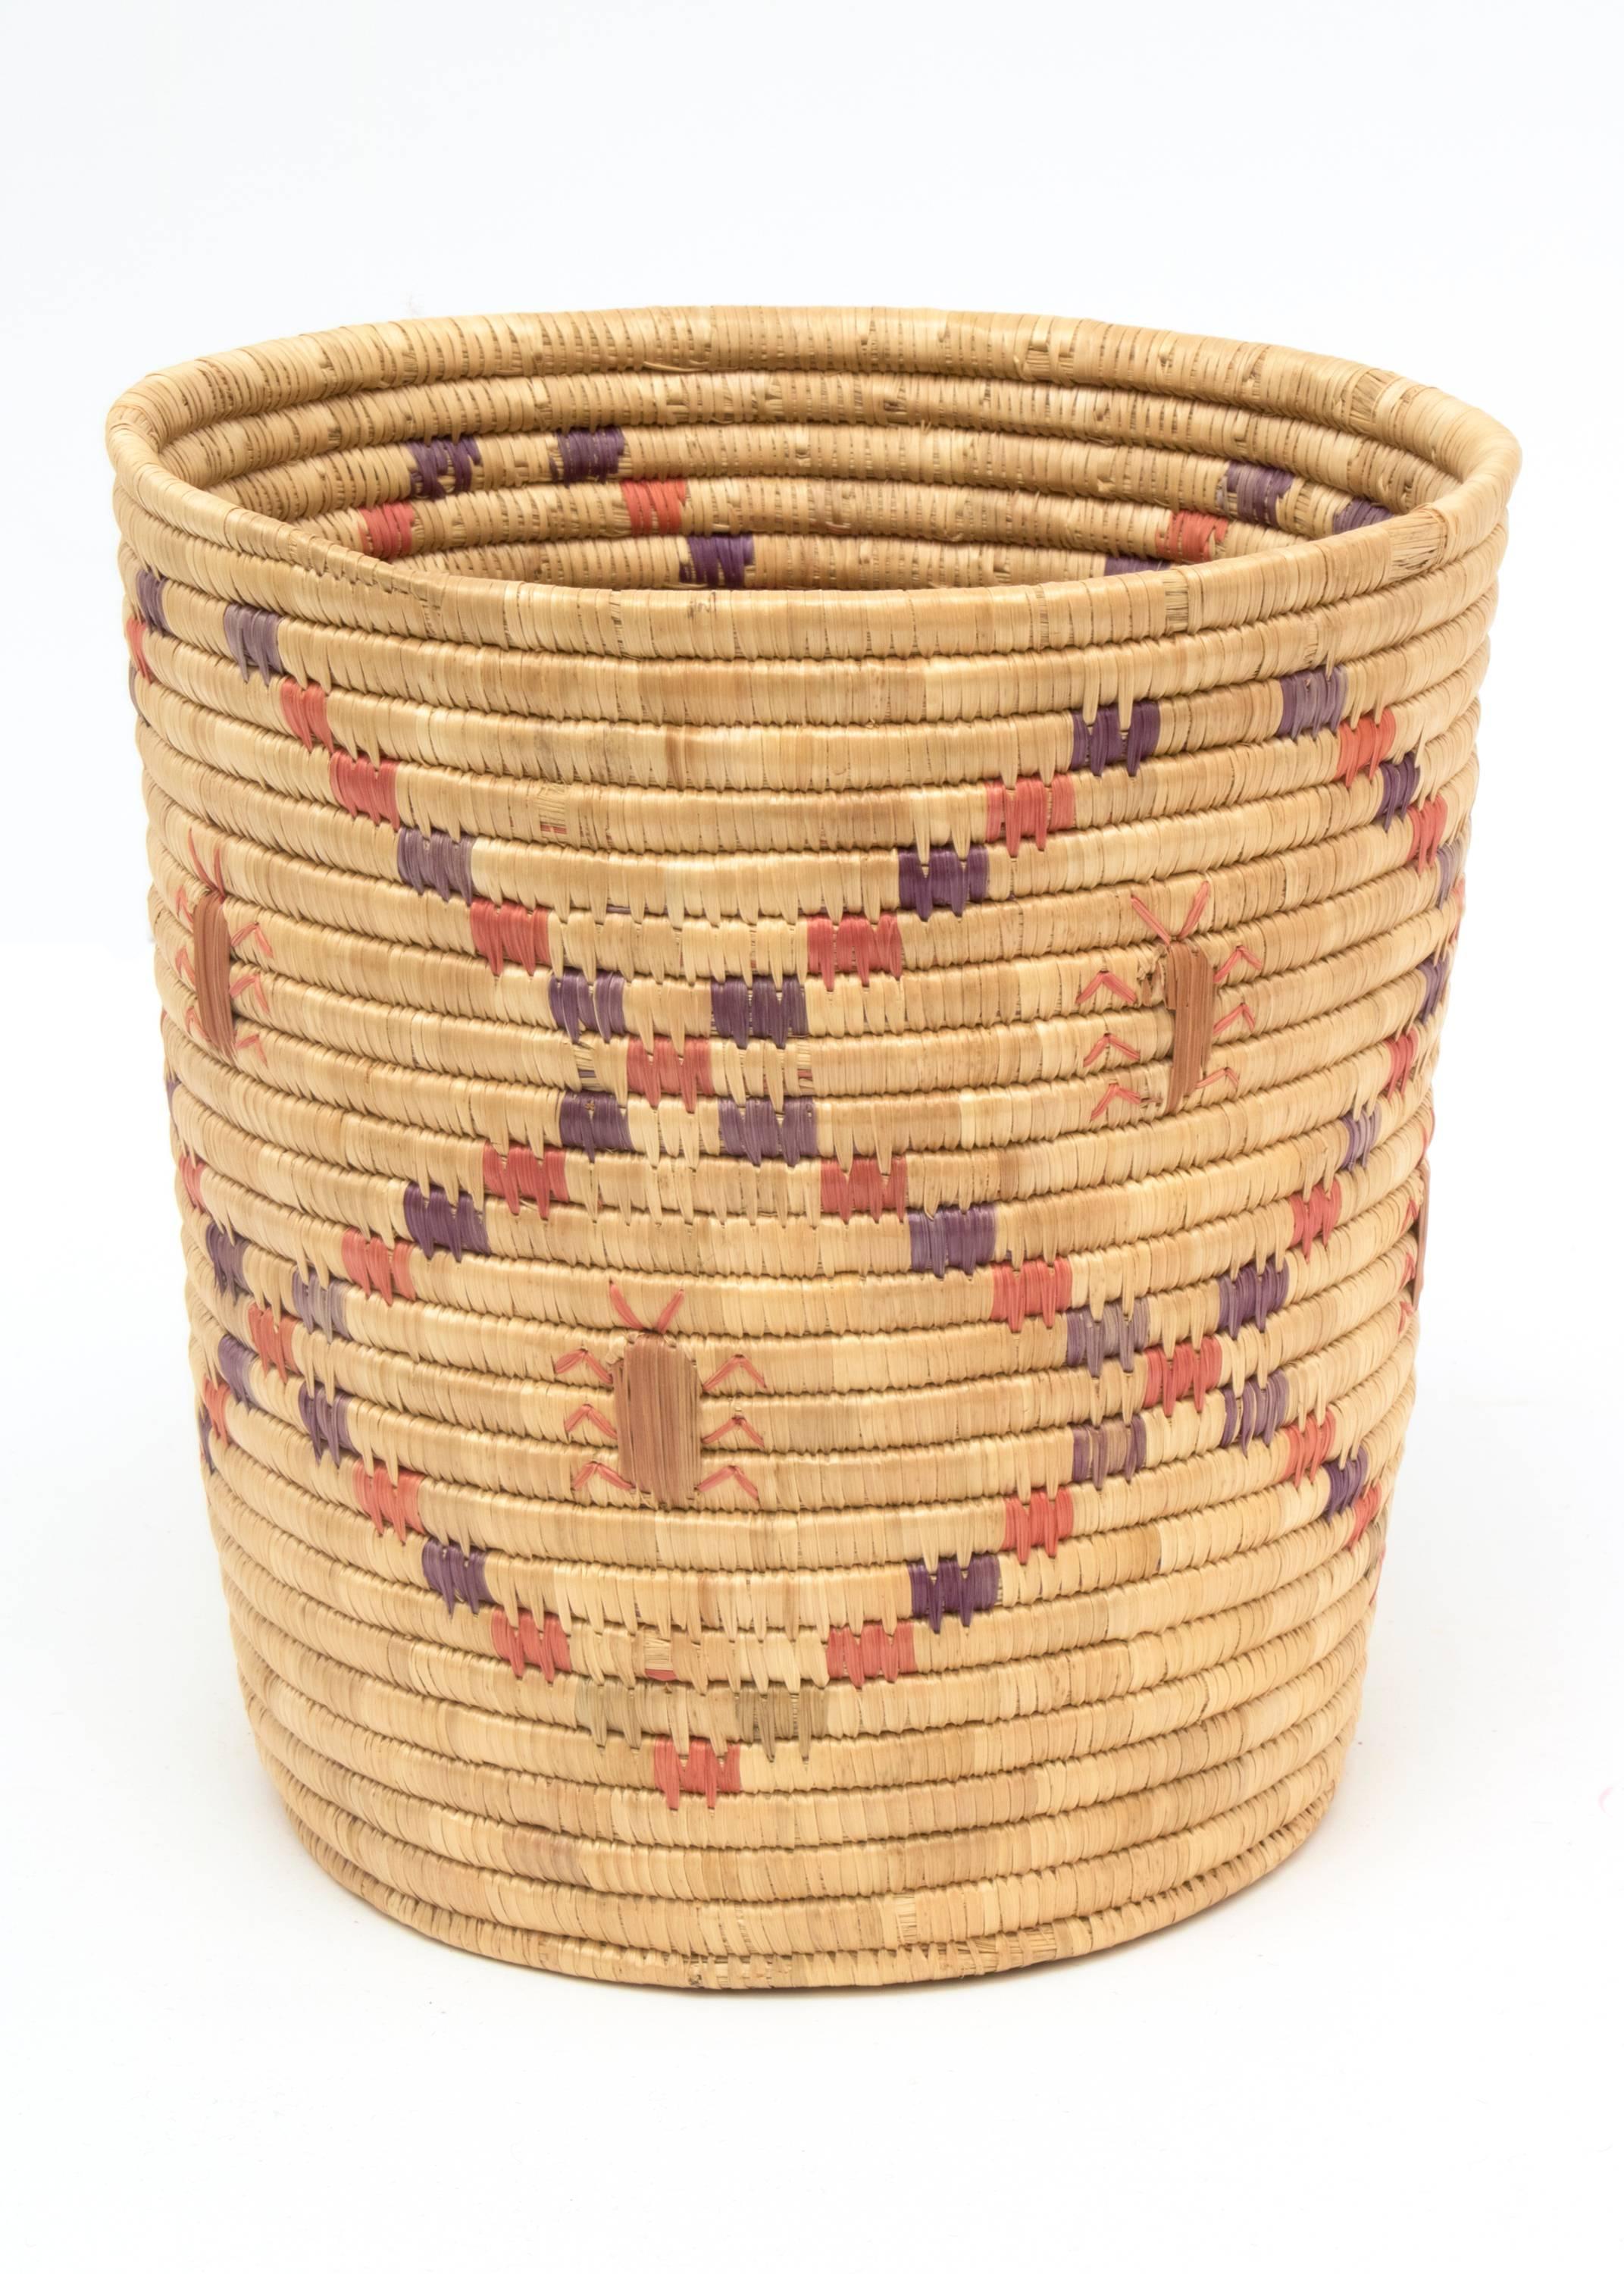 inuit baskets for sale